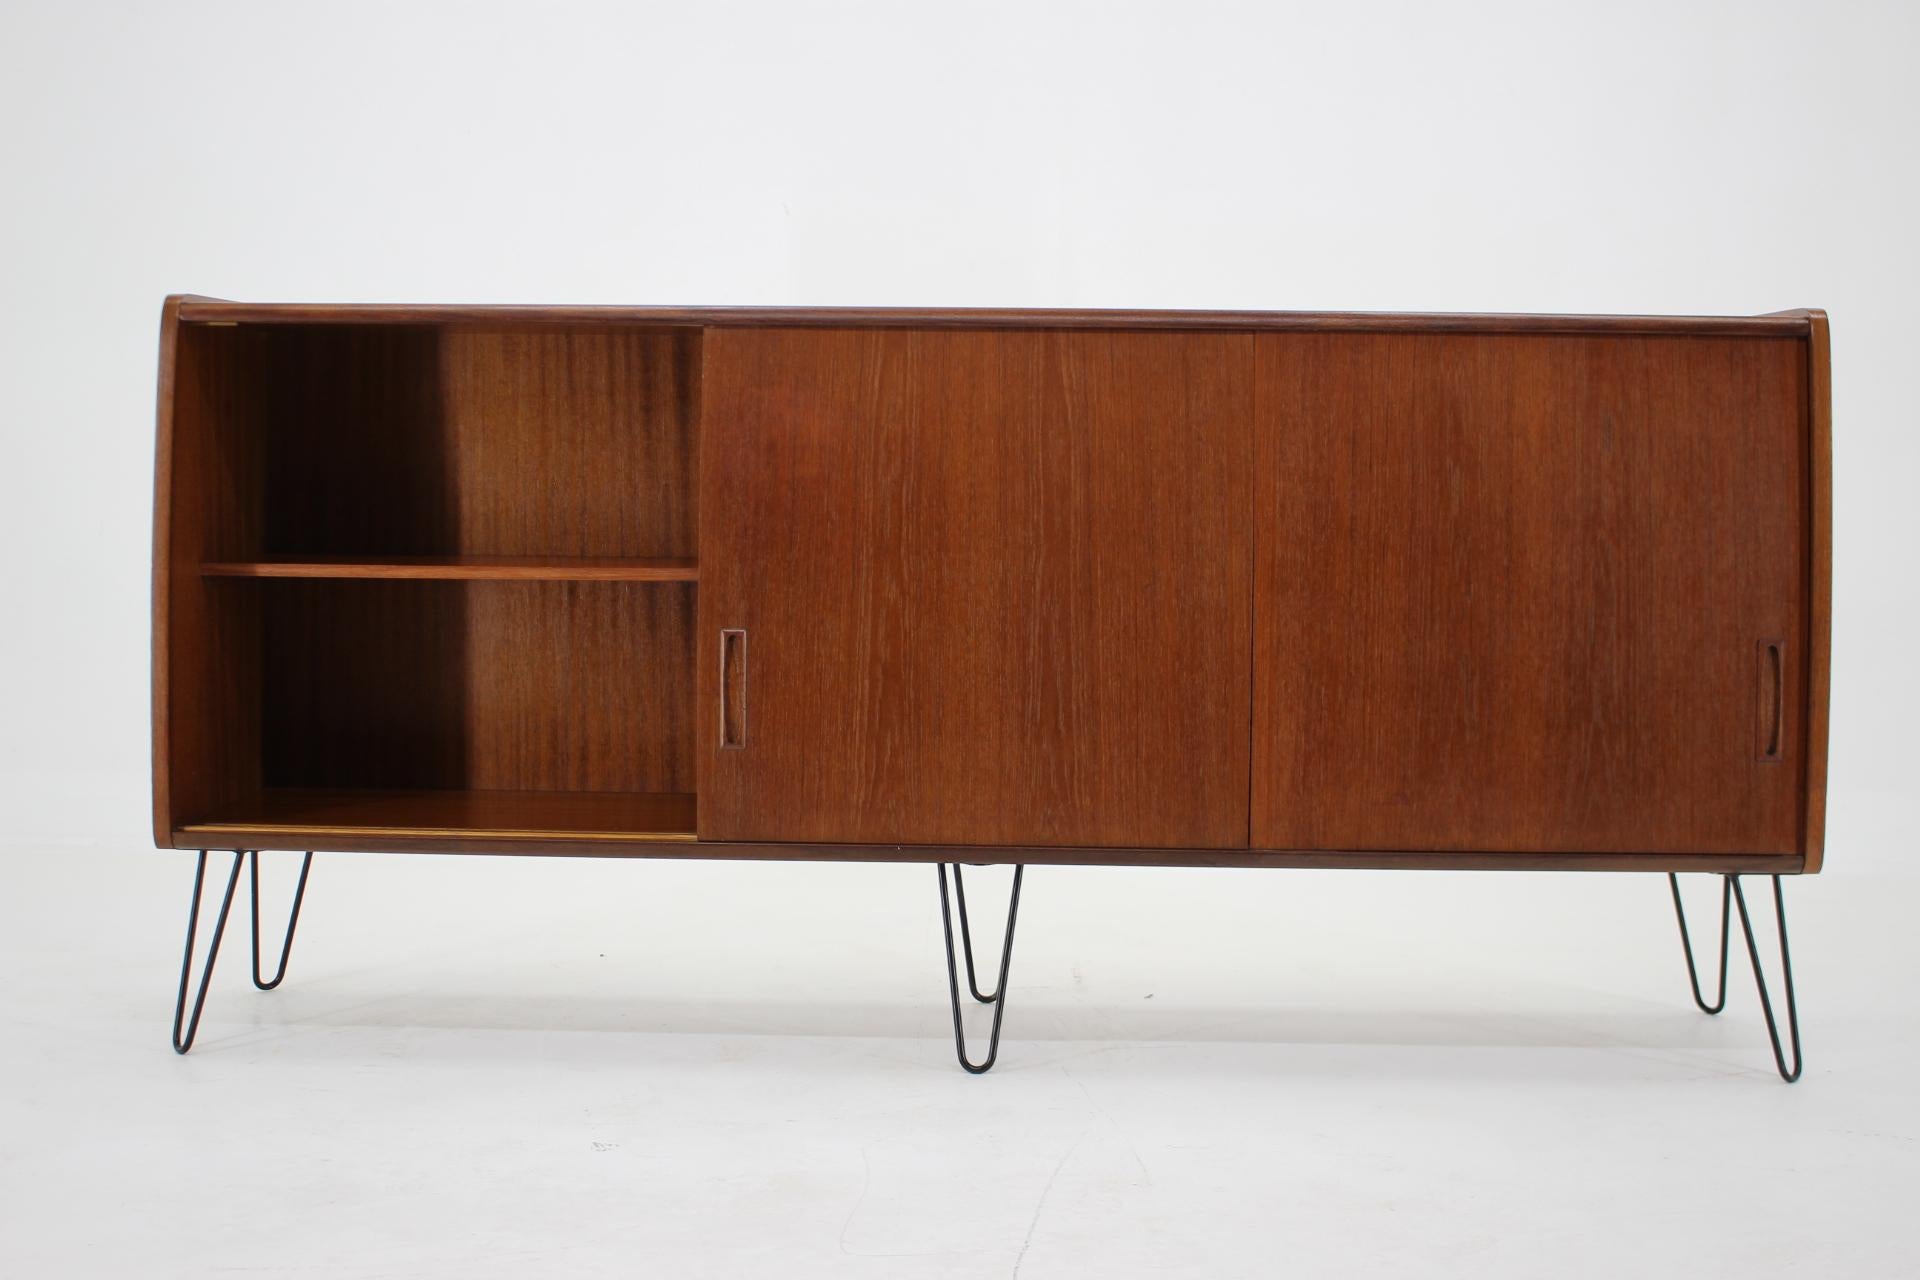 1960s Upcycled Teak Cabinet, Denmark For Sale 1